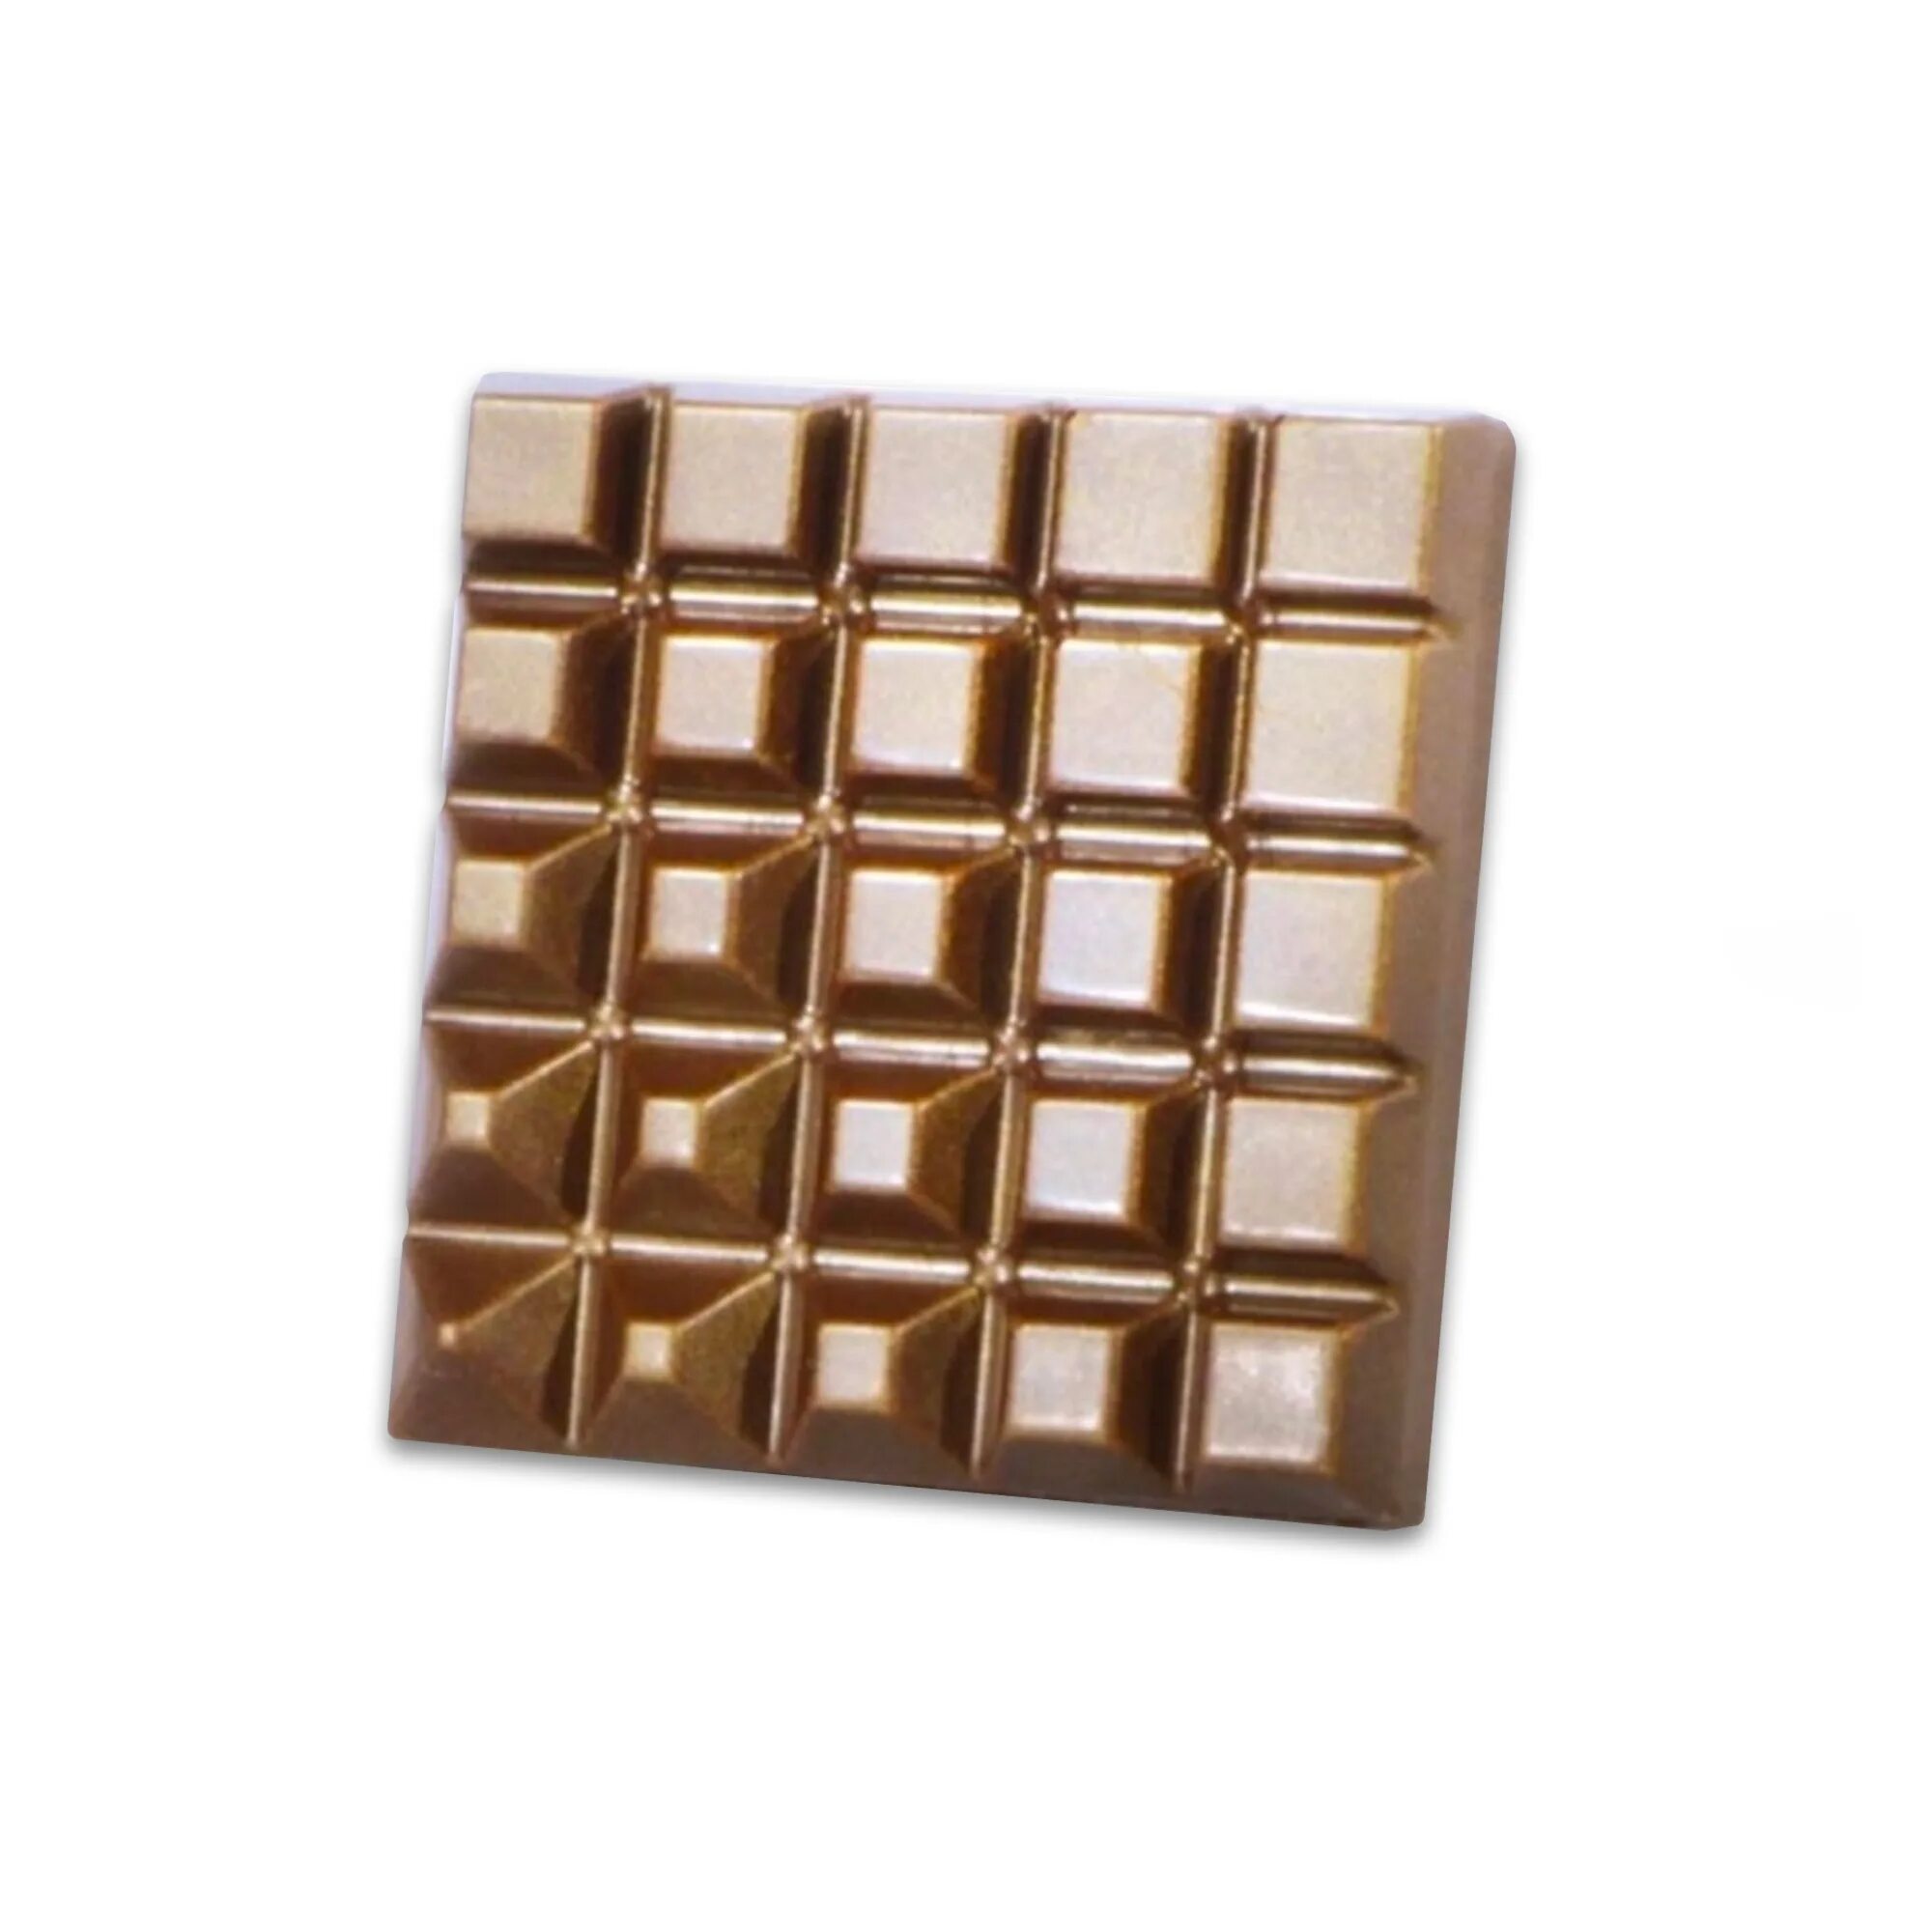 Шоколад квадрат. Ma1925 форма поликарбонатная Кристалл martellato Италия. Martellato формы для шоколада. Квадратная плитка шоколада. Шоколад квадратный.